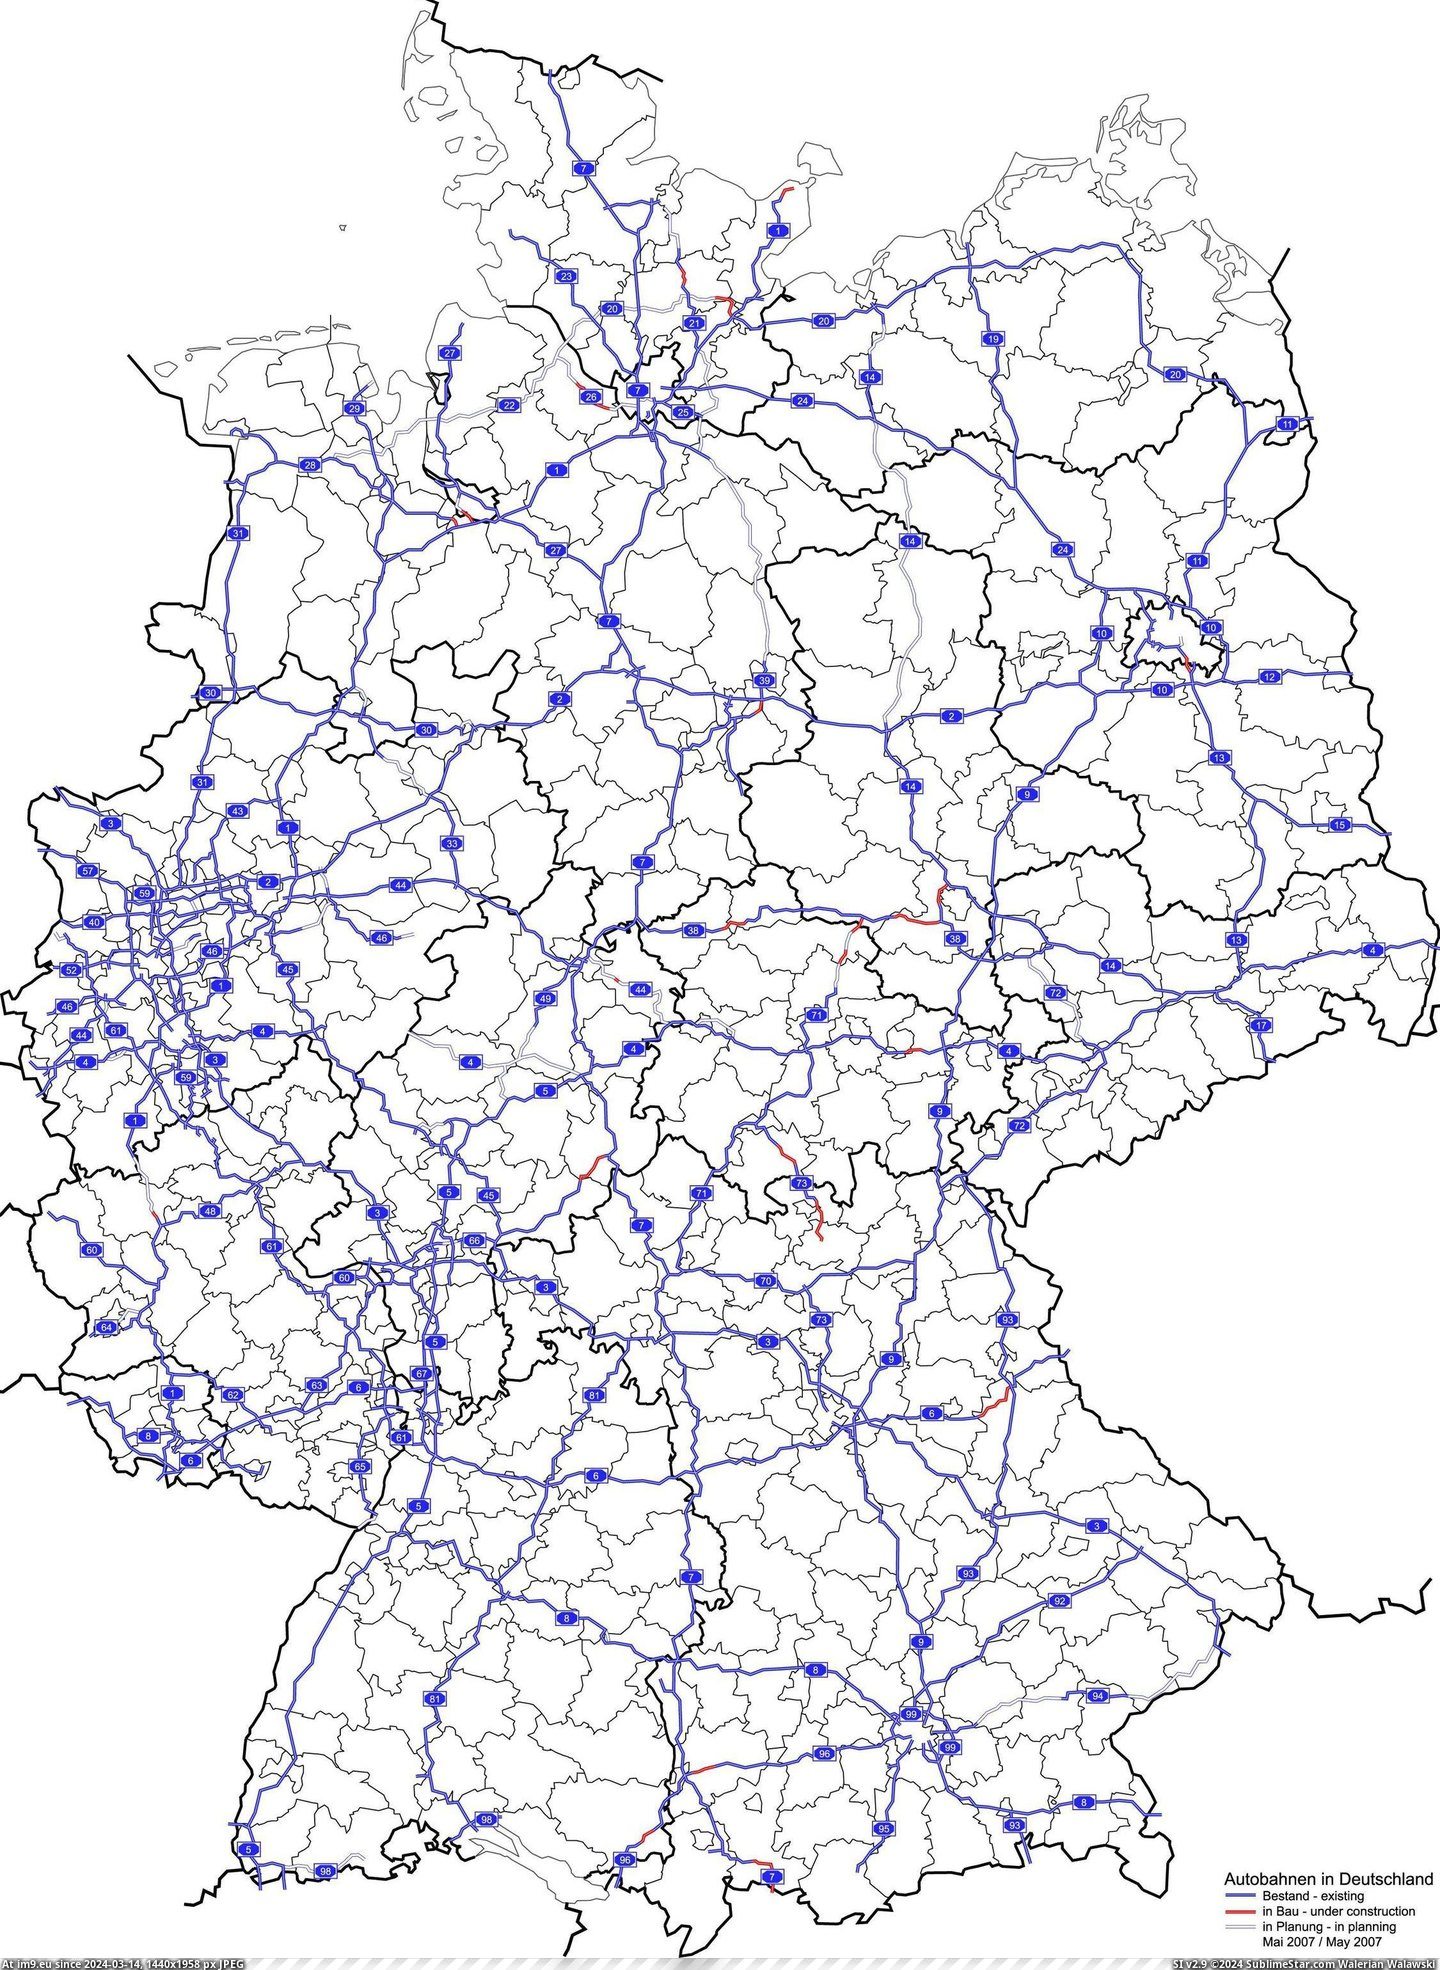 #Germany  #Autobahns [Mapporn] Autobahns of Germany [2251x3073] Pic. (Bild von album My r/MAPS favs))